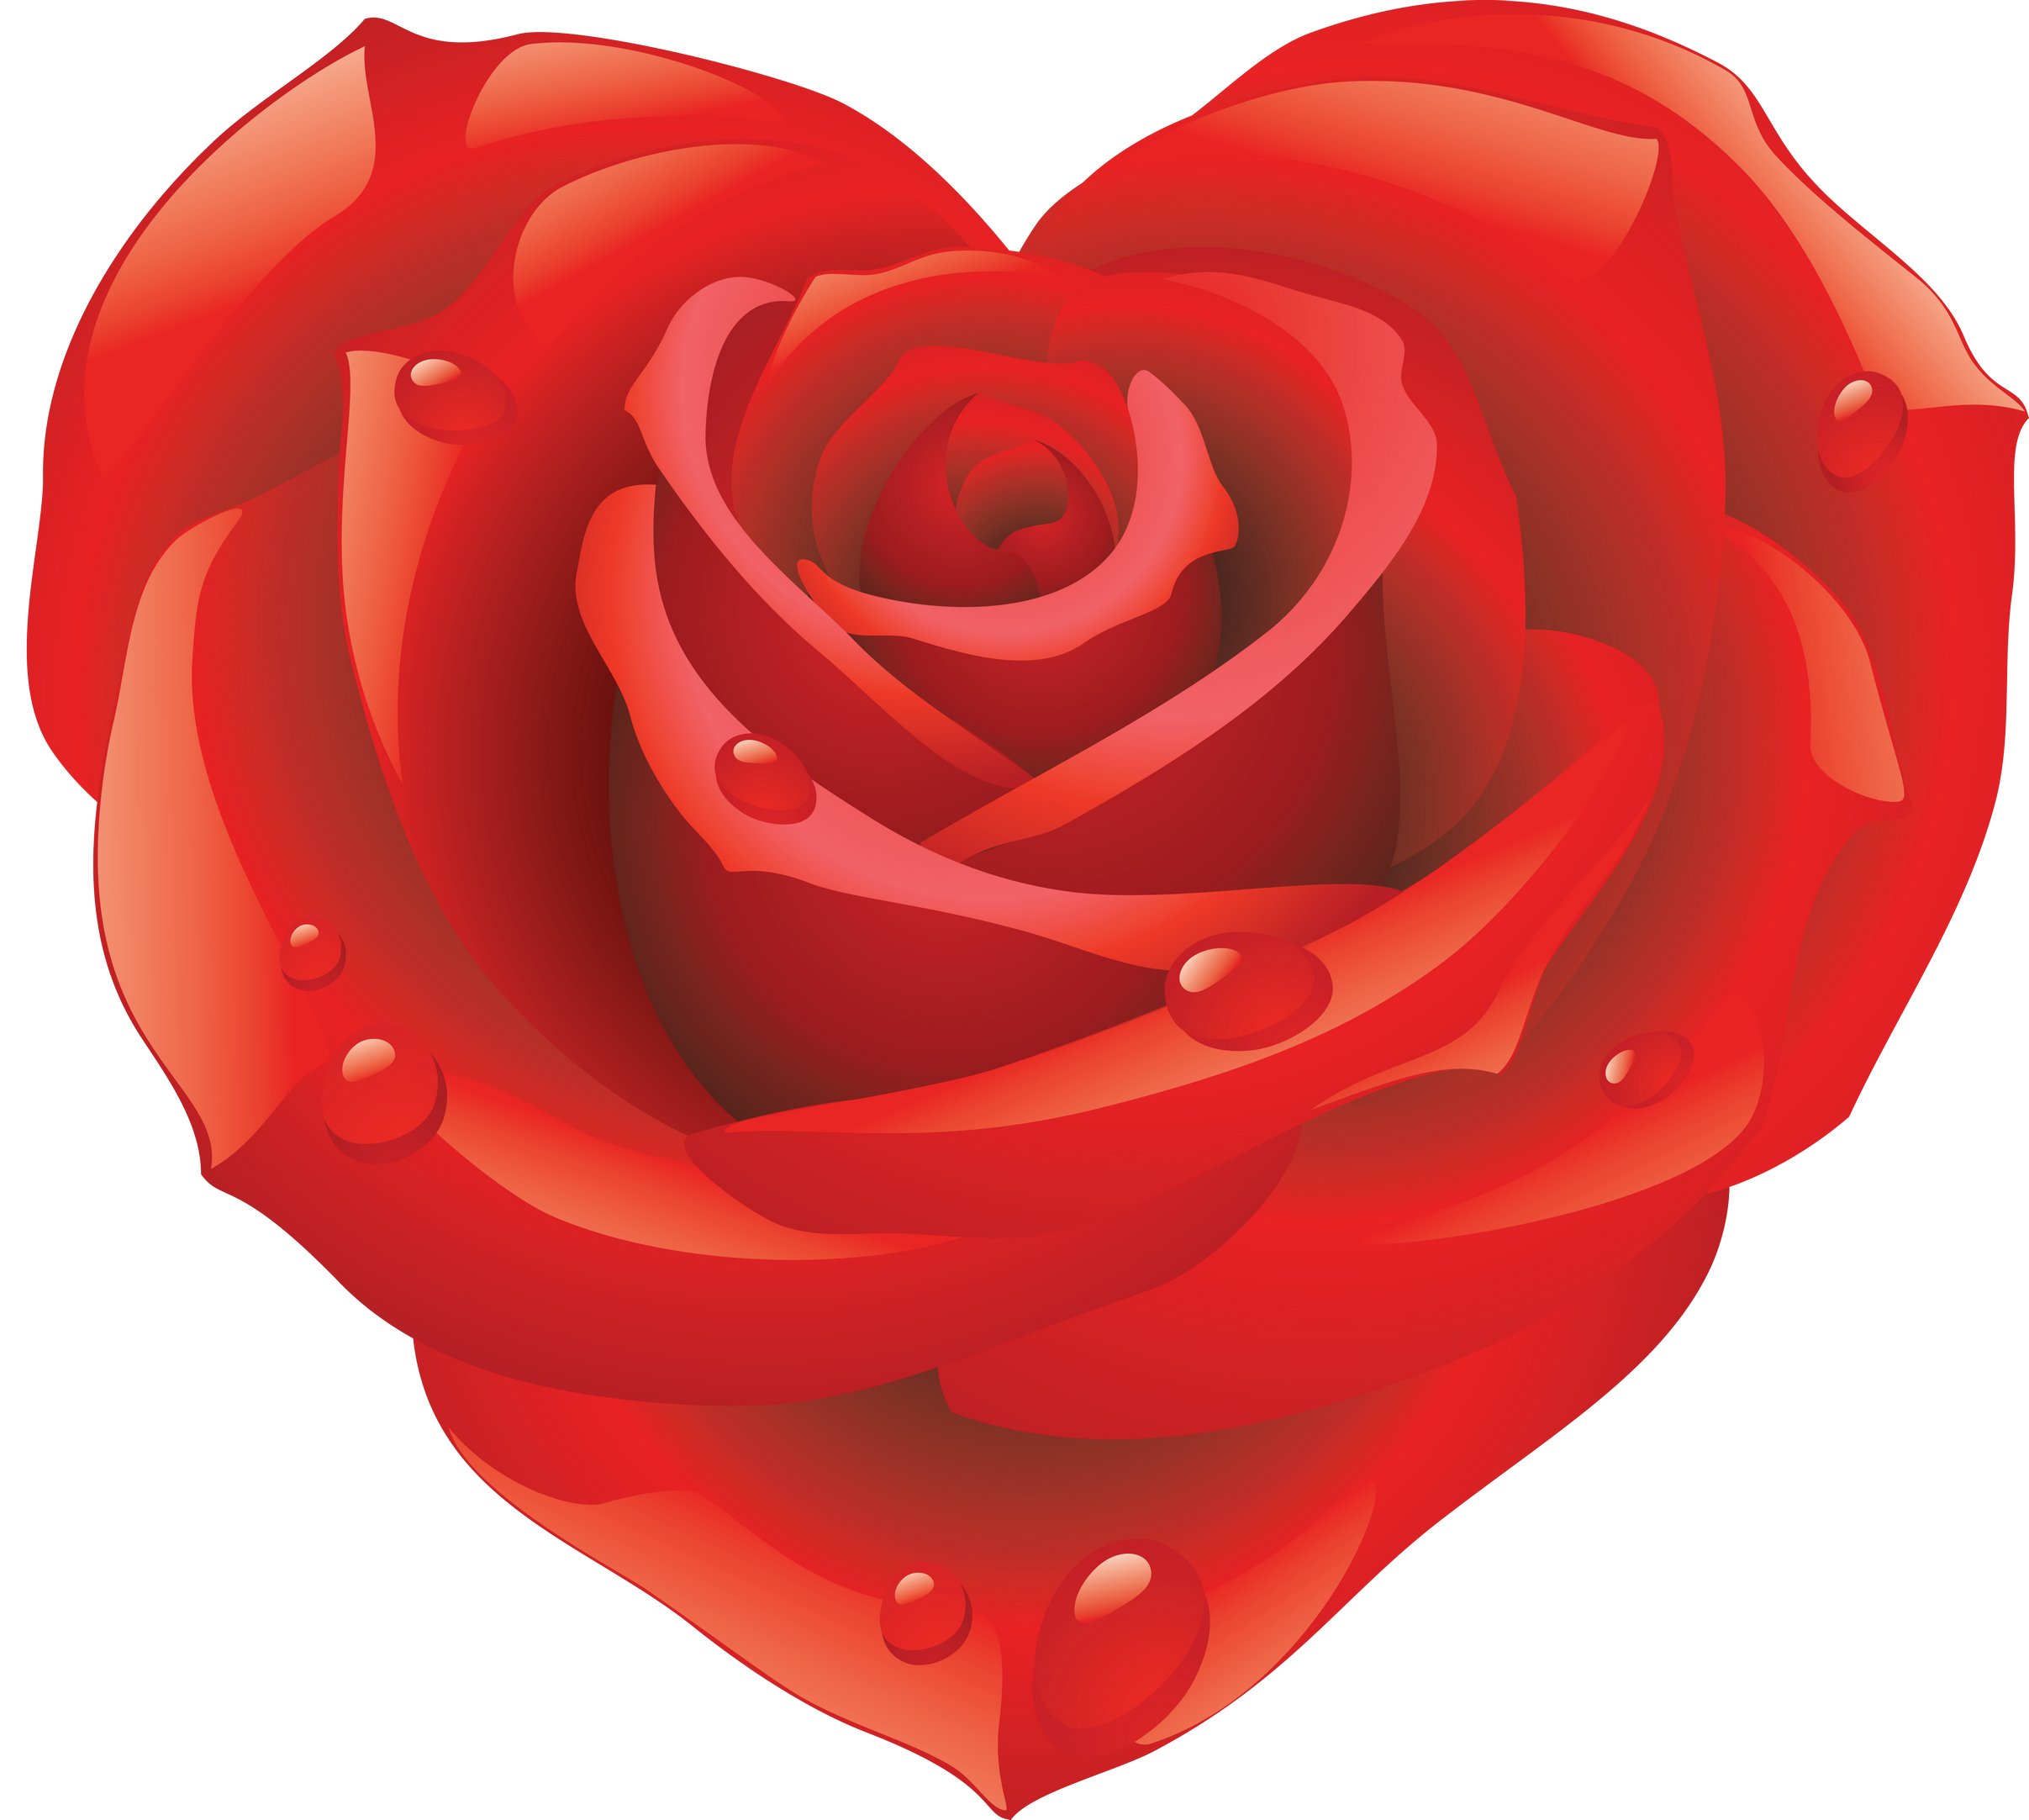 Red Rose PNG Image